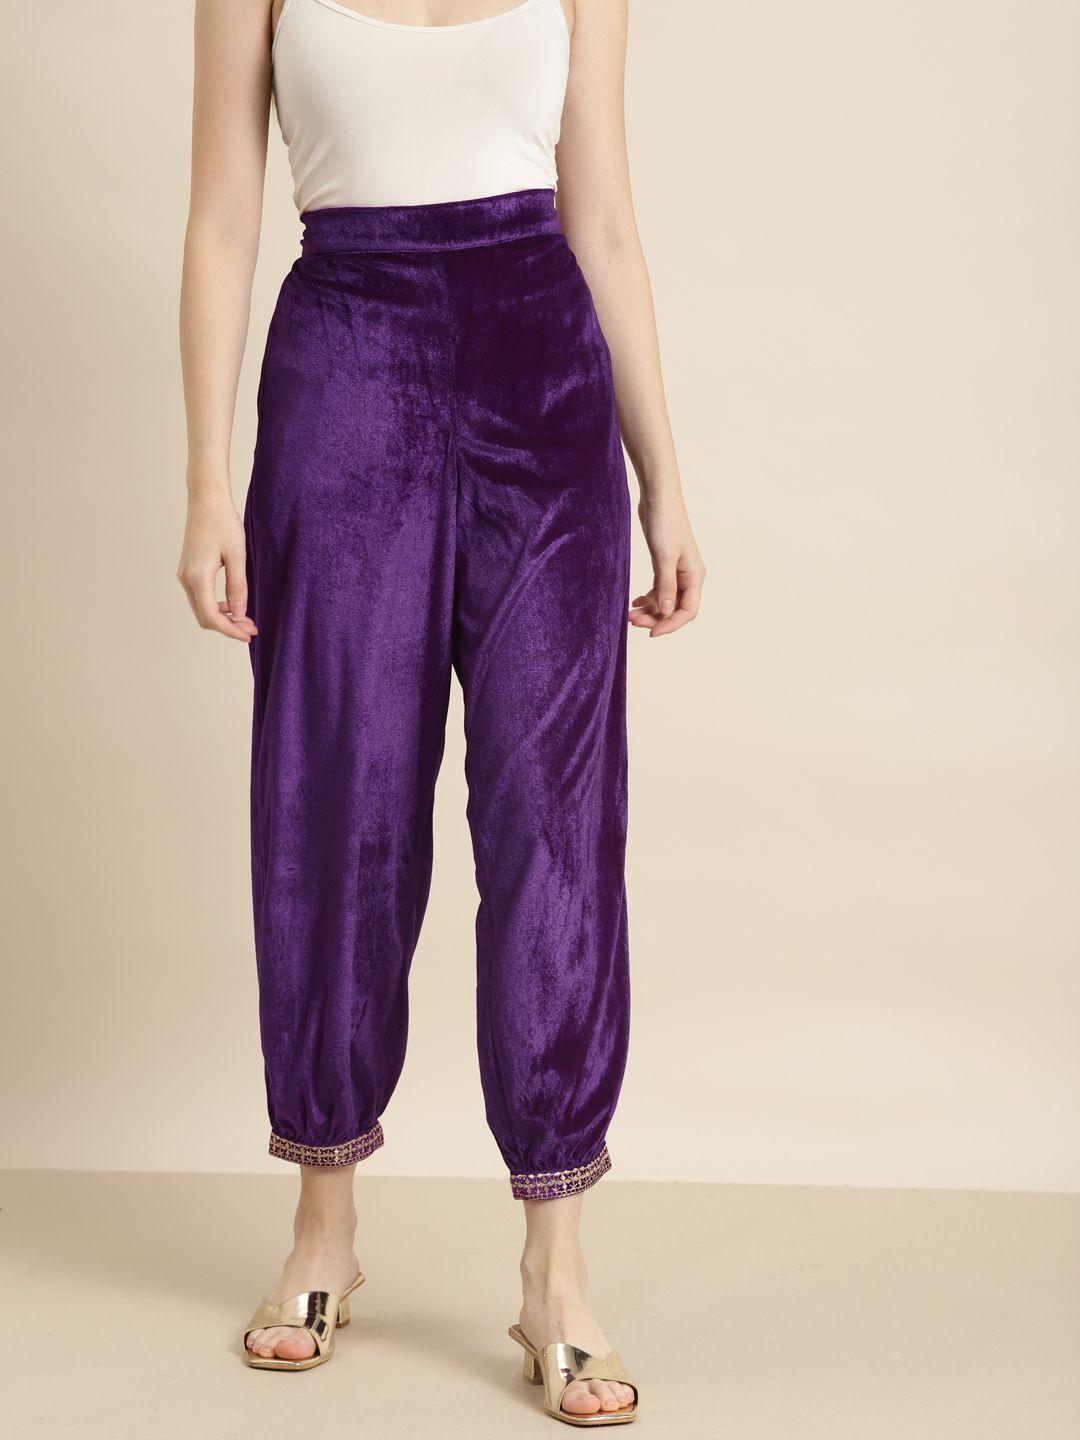 shae by sassafras women purple trousers